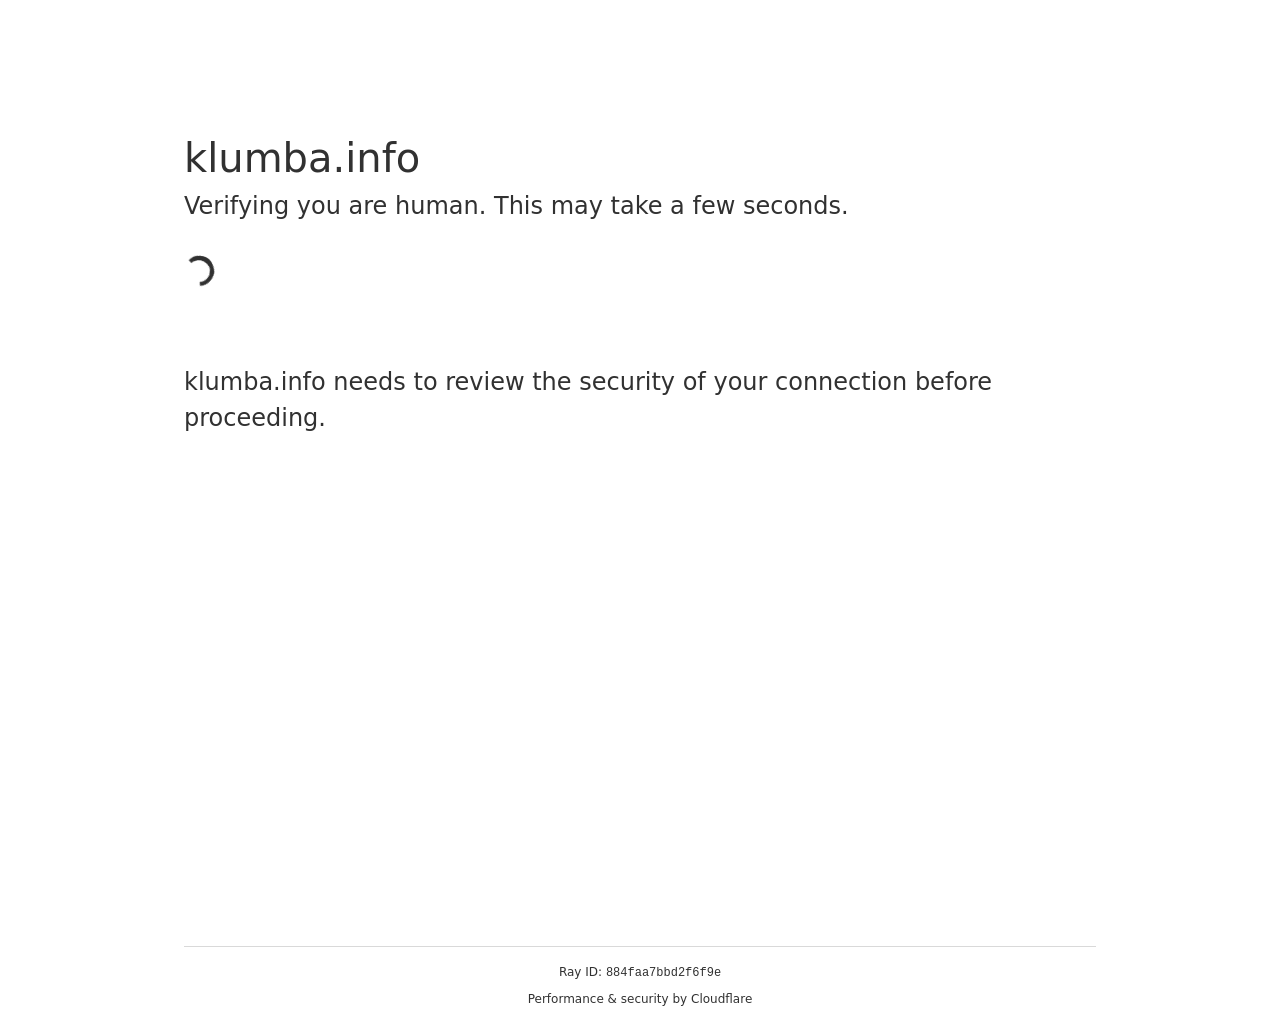 klumba.info